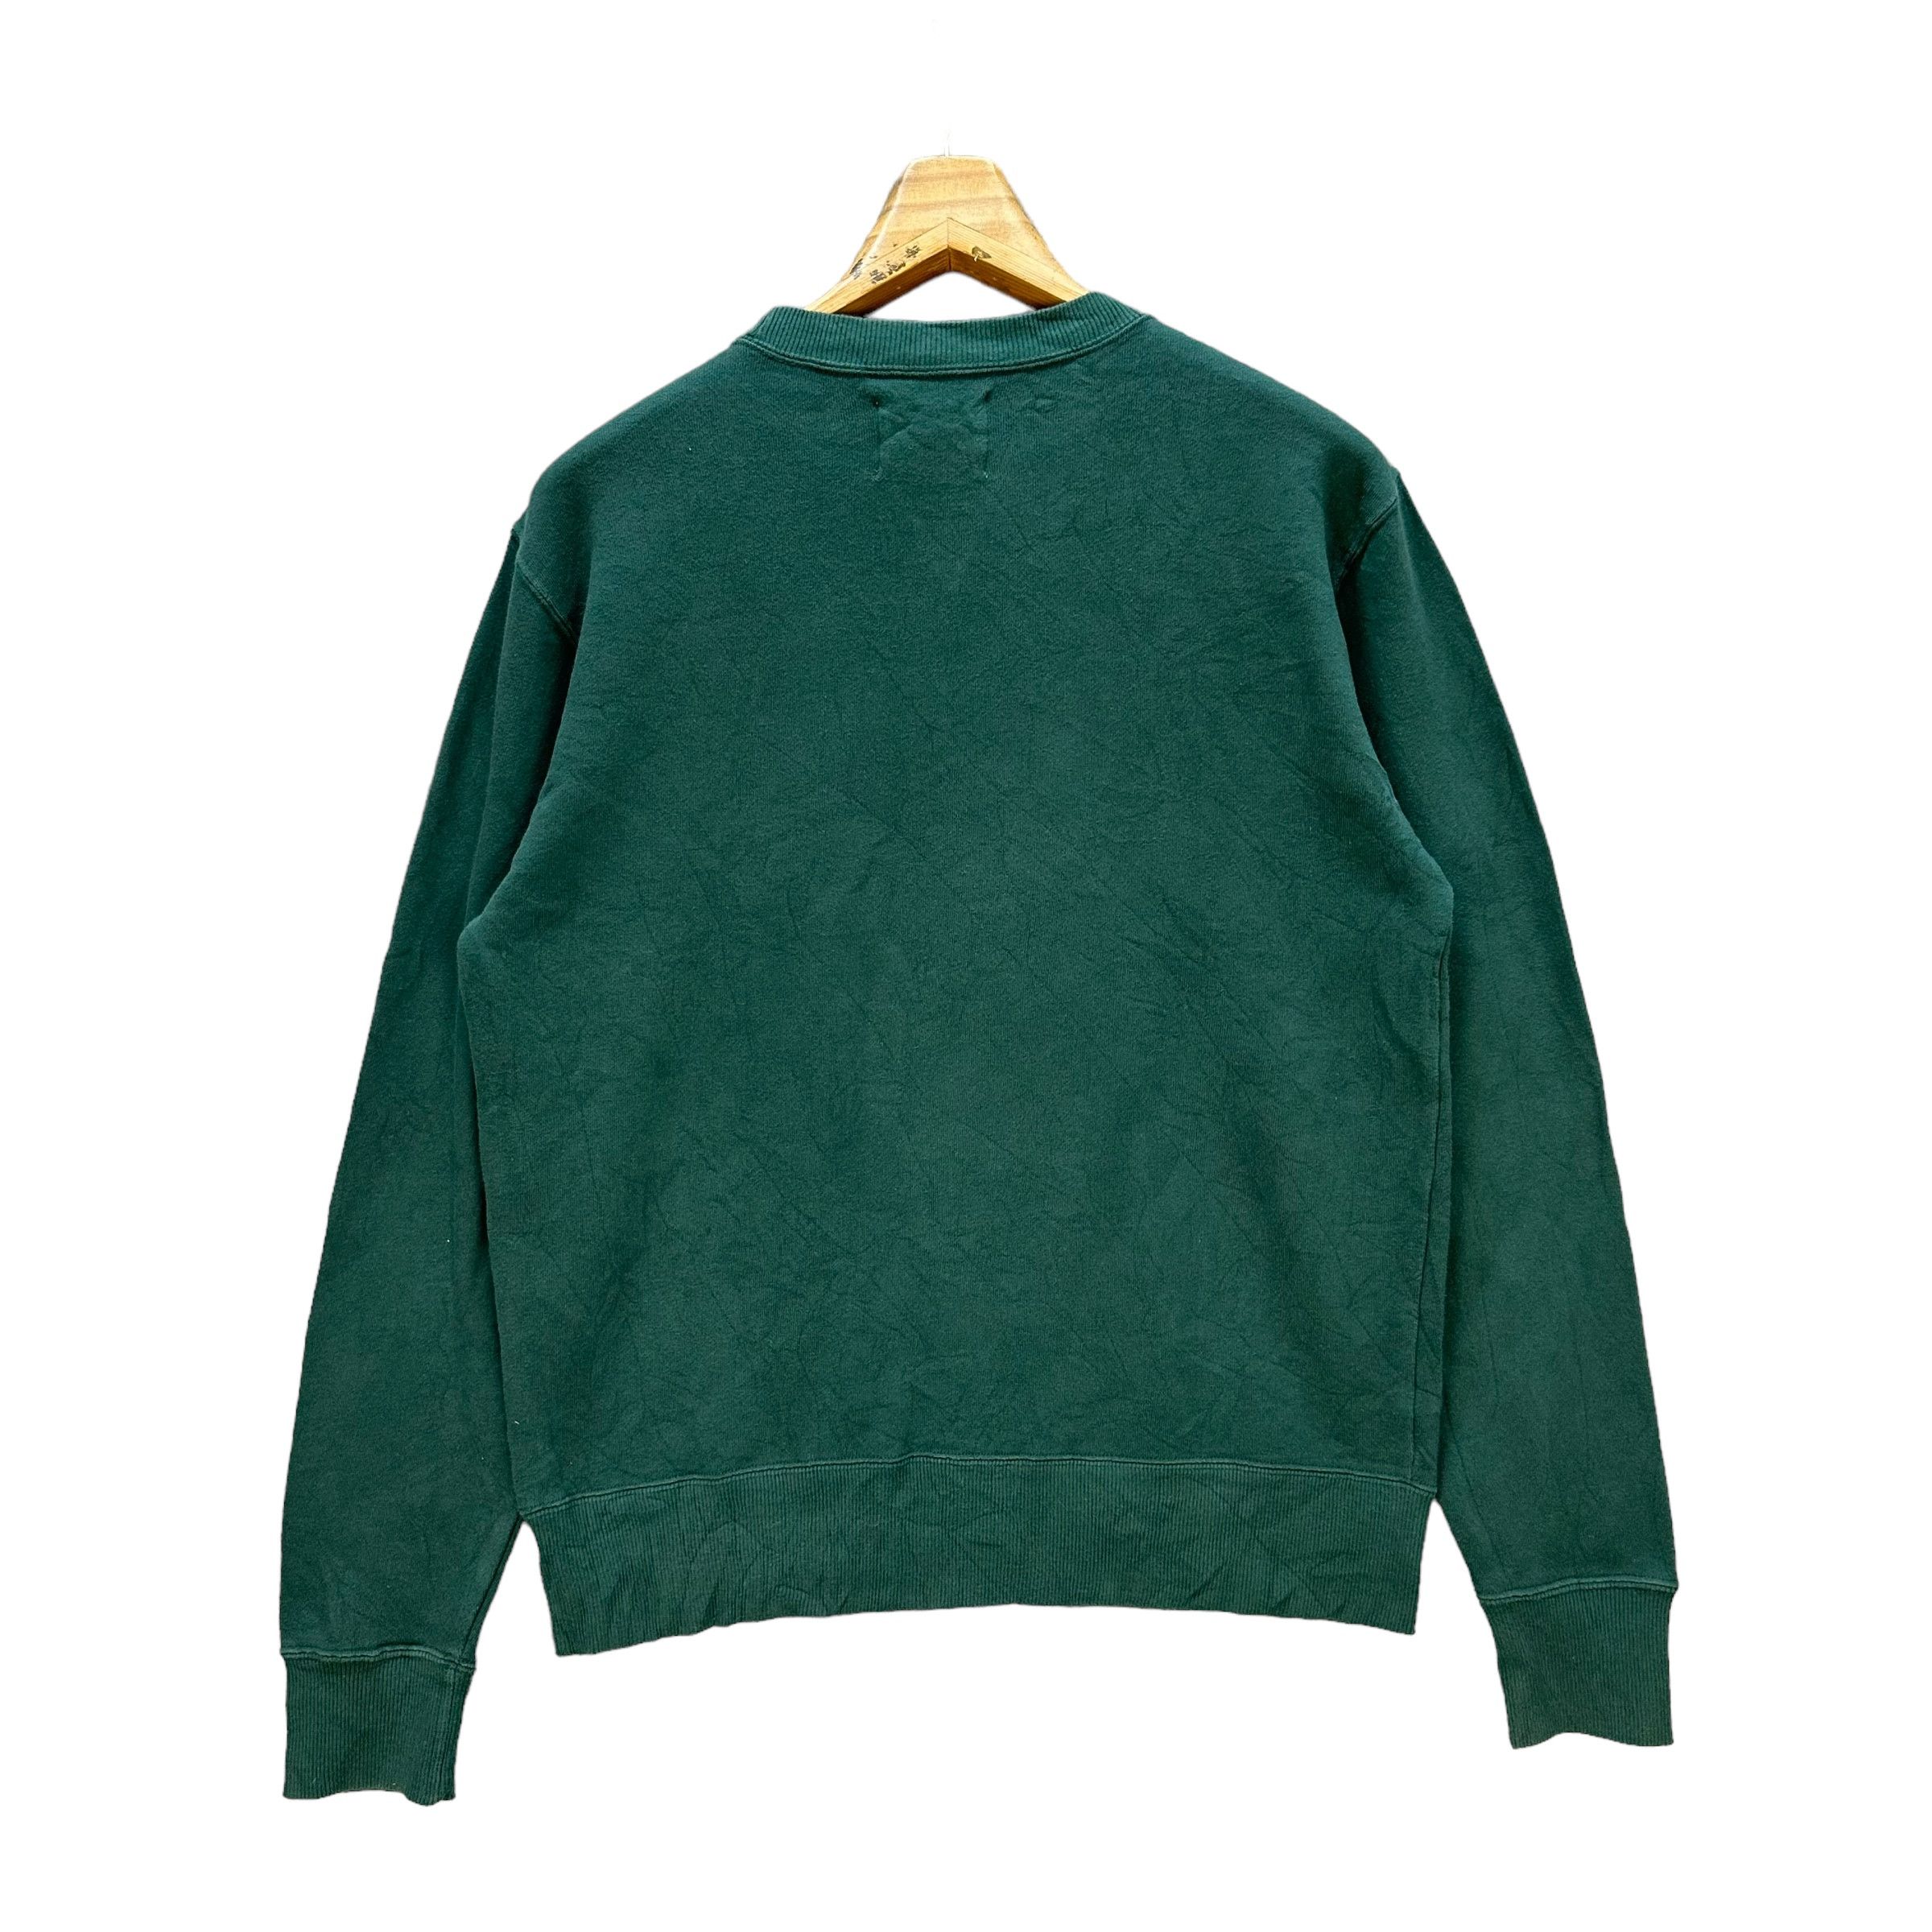 Champion Green Sweatshirts #9125-59 - 9